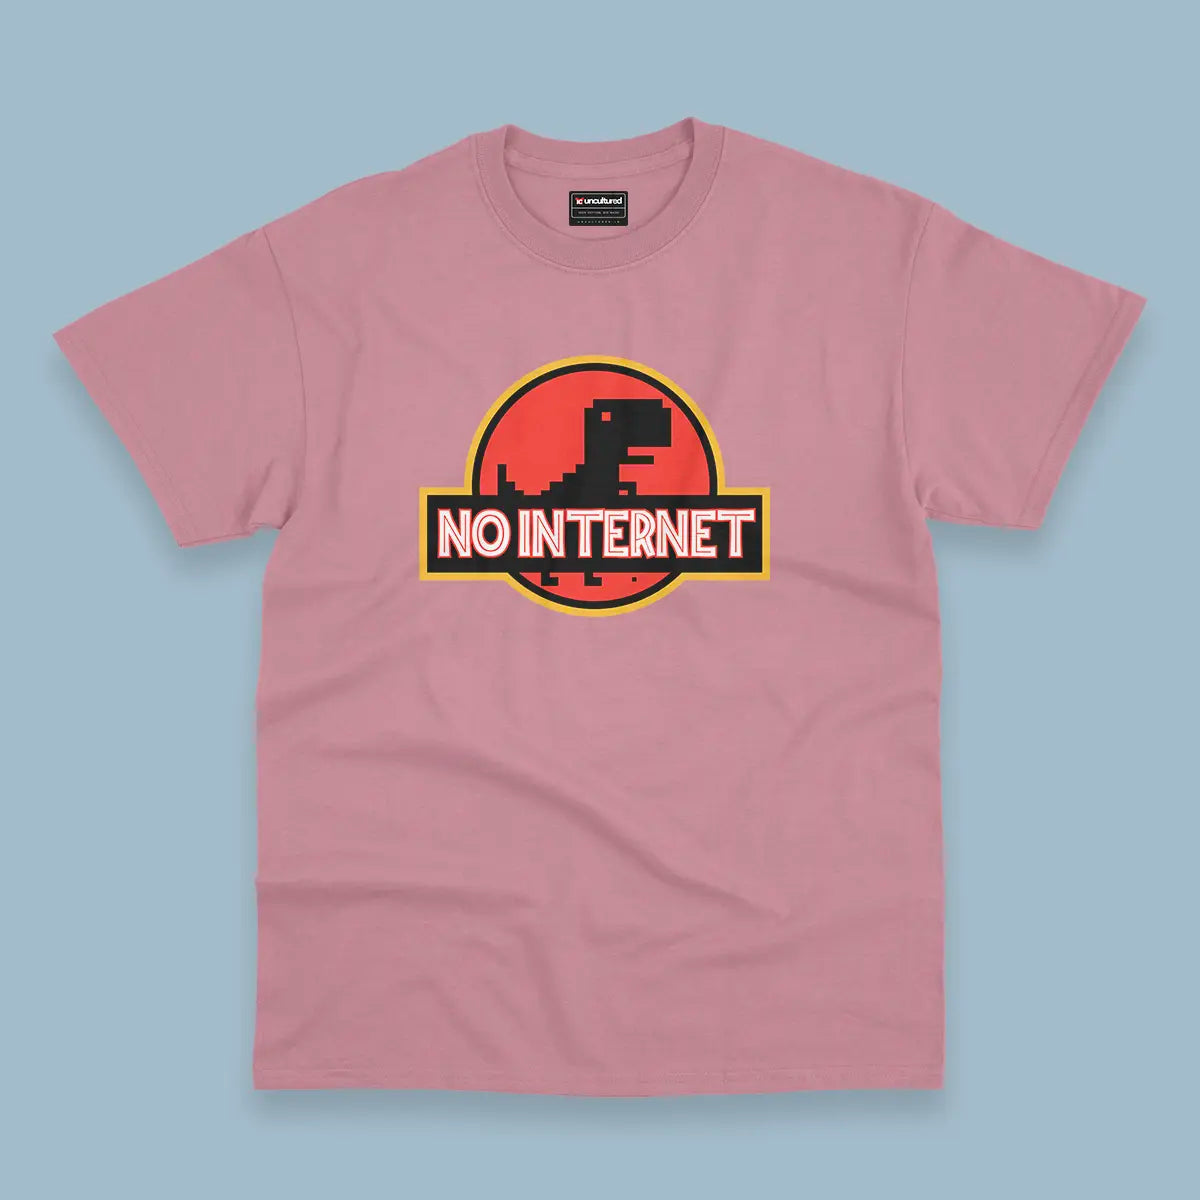 No internet - Oversized